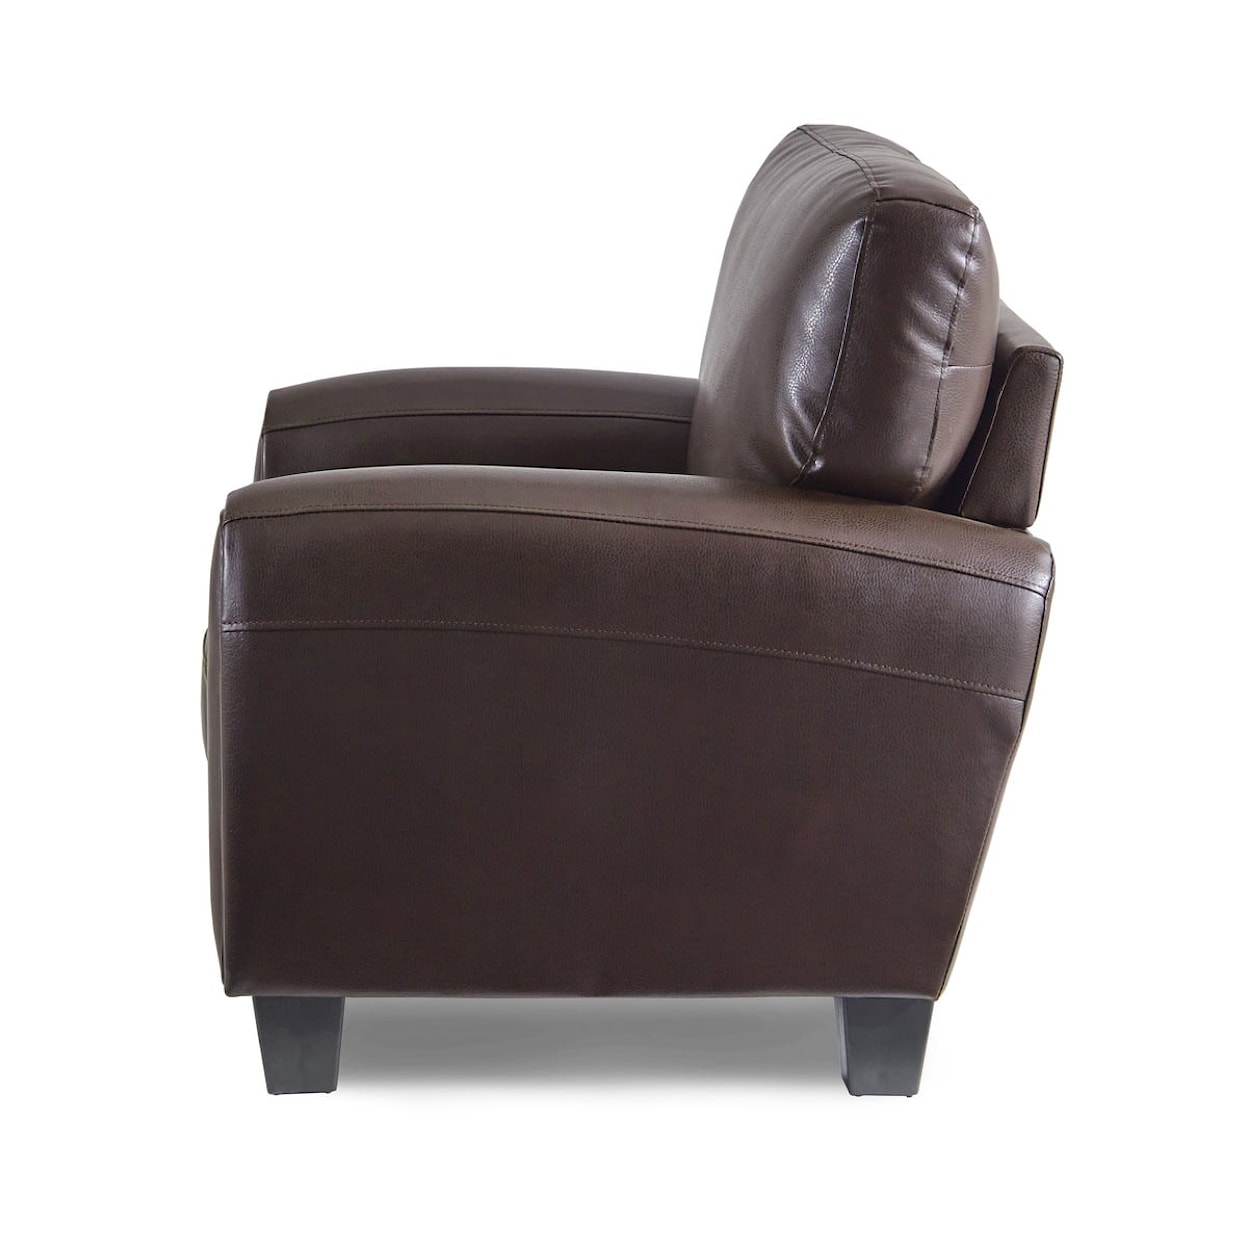 Homelegance Furniture Rubin Stationary Living Room Chair